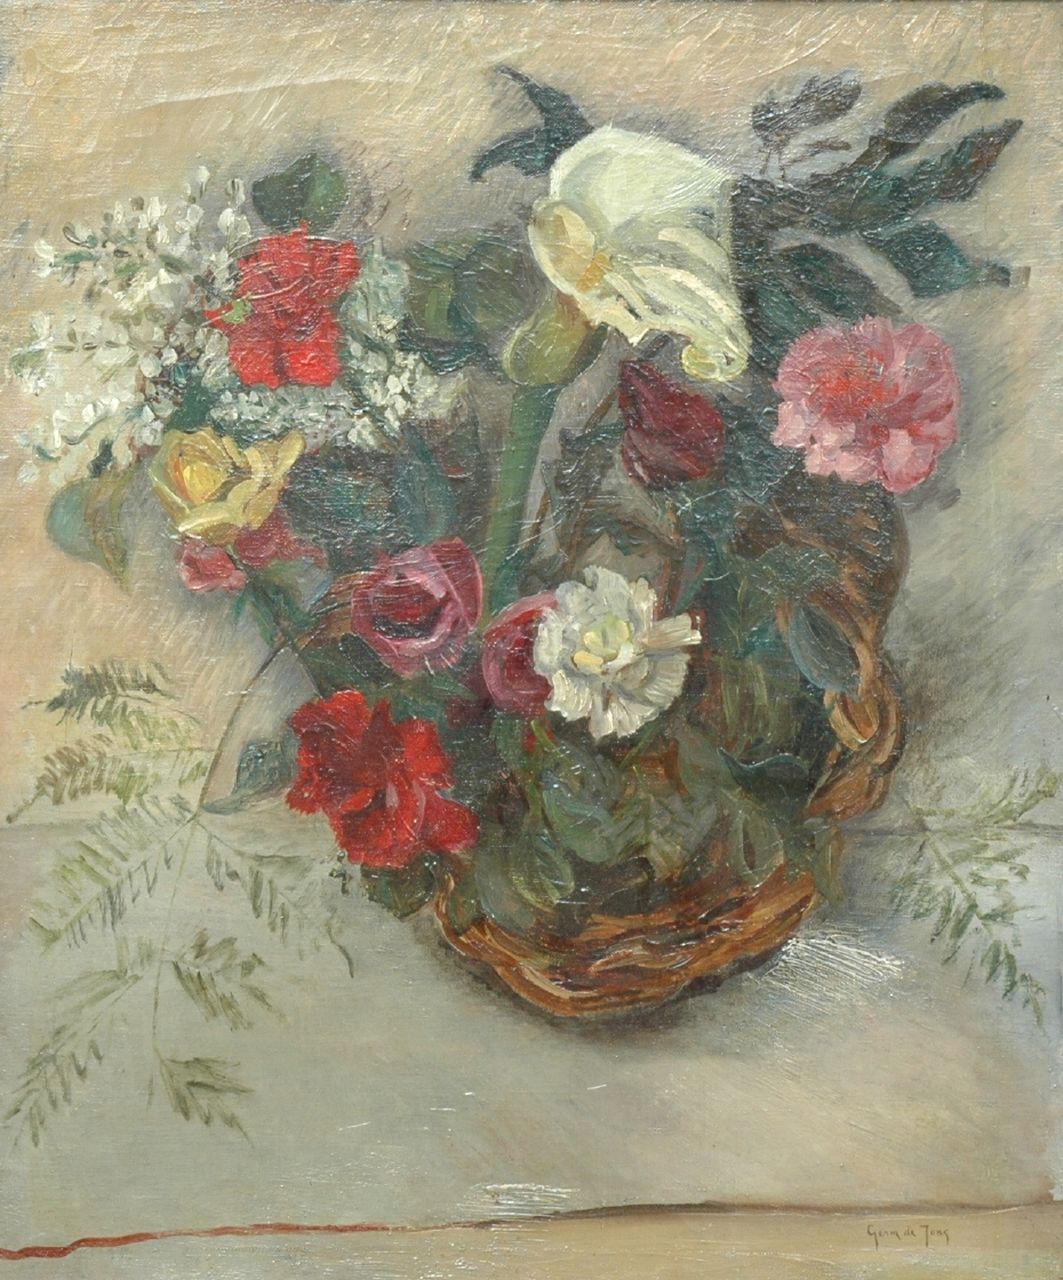 Jong G. de | Gerben 'Germ' de Jong, A basket with flowers, oil on canvas 61.3 x 51.8 cm, signed l.r.